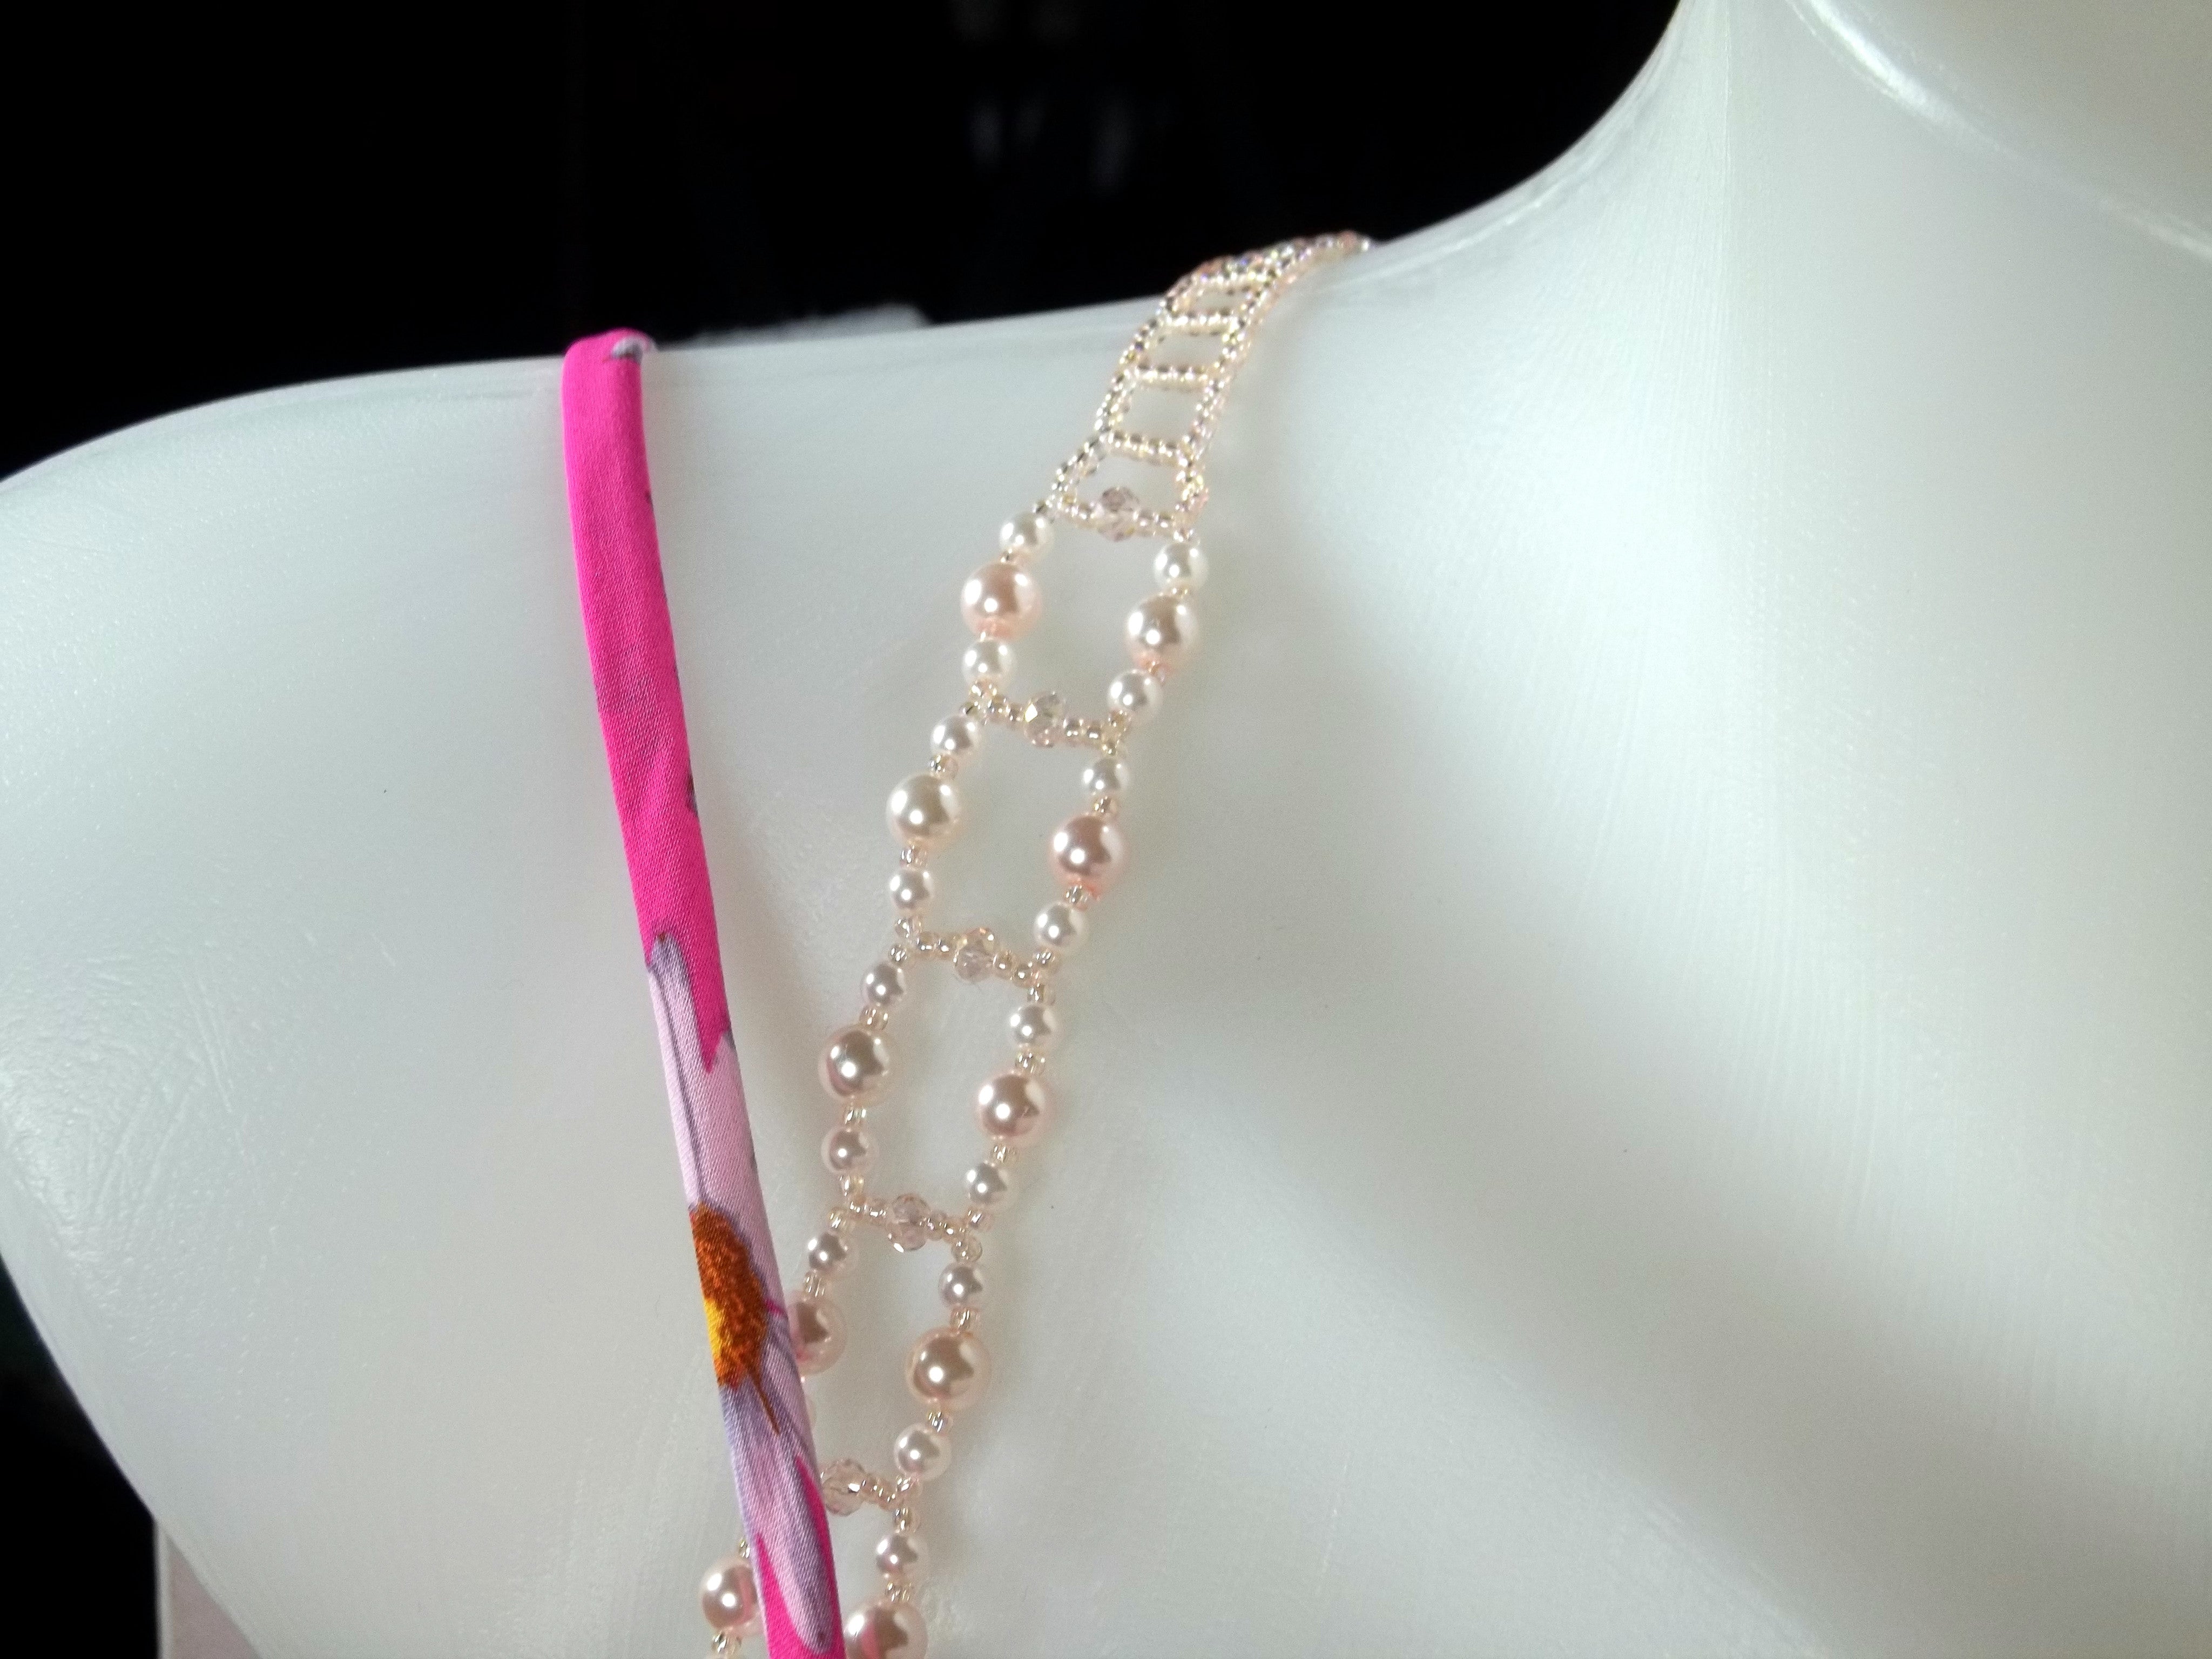 Swarovski Pearl and Crystal Adjustable Beaded Bra Strap Kit Only